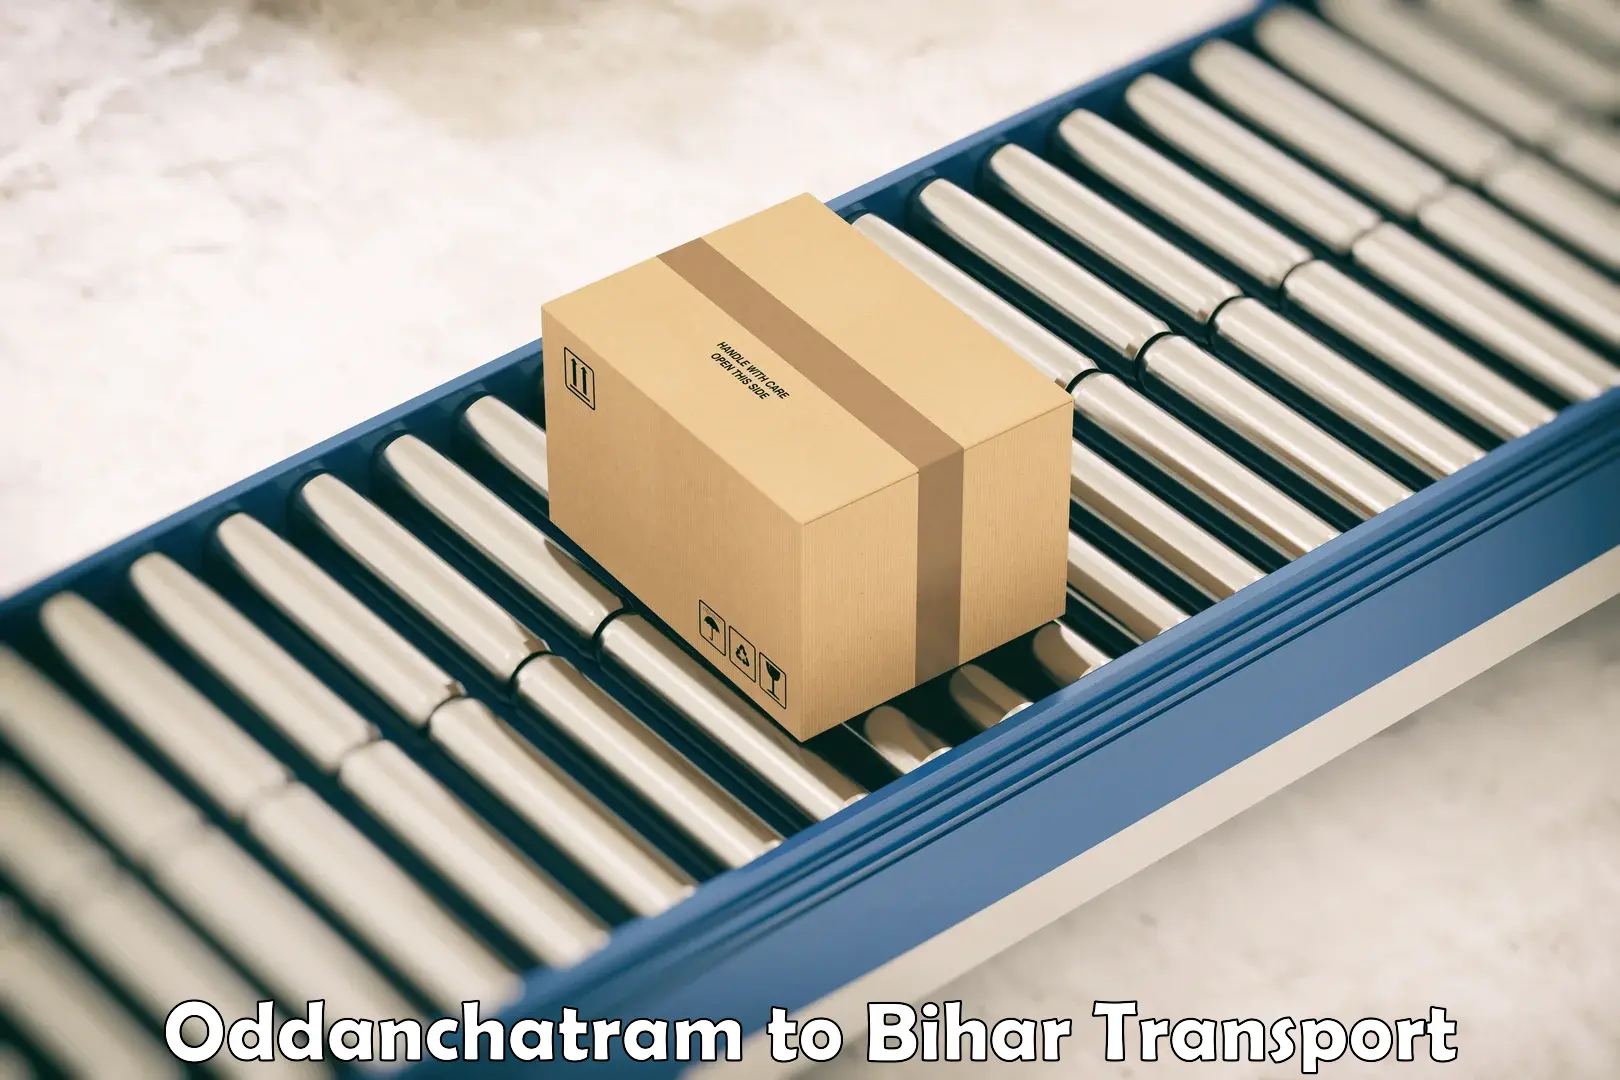 Pick up transport service Oddanchatram to East Champaran